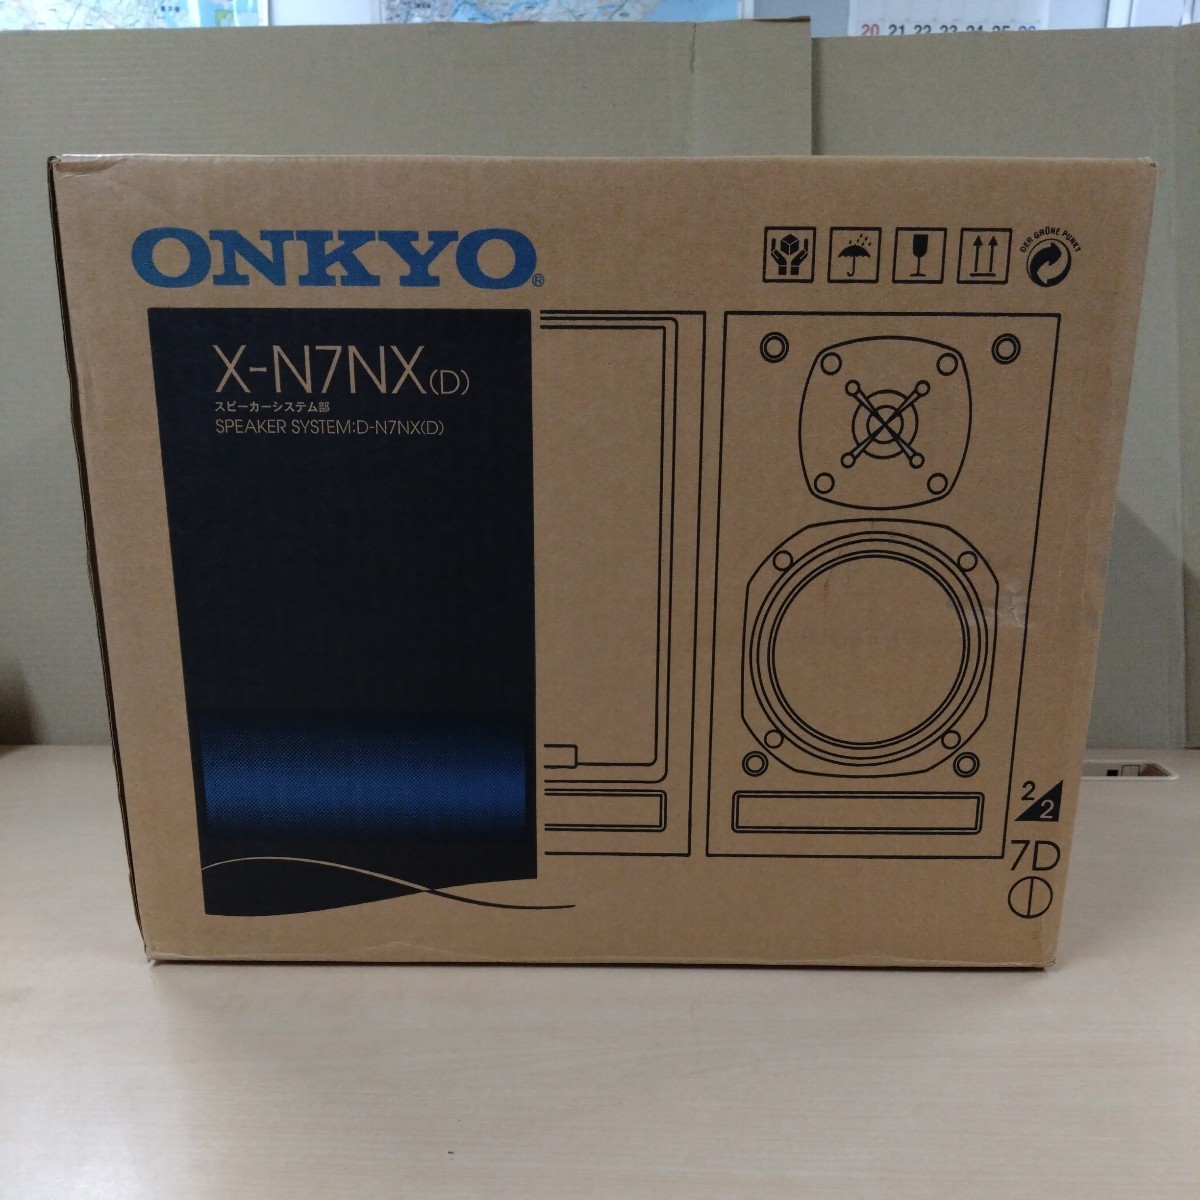 ONKYO スピーカーシステム X-N7NX(D)-